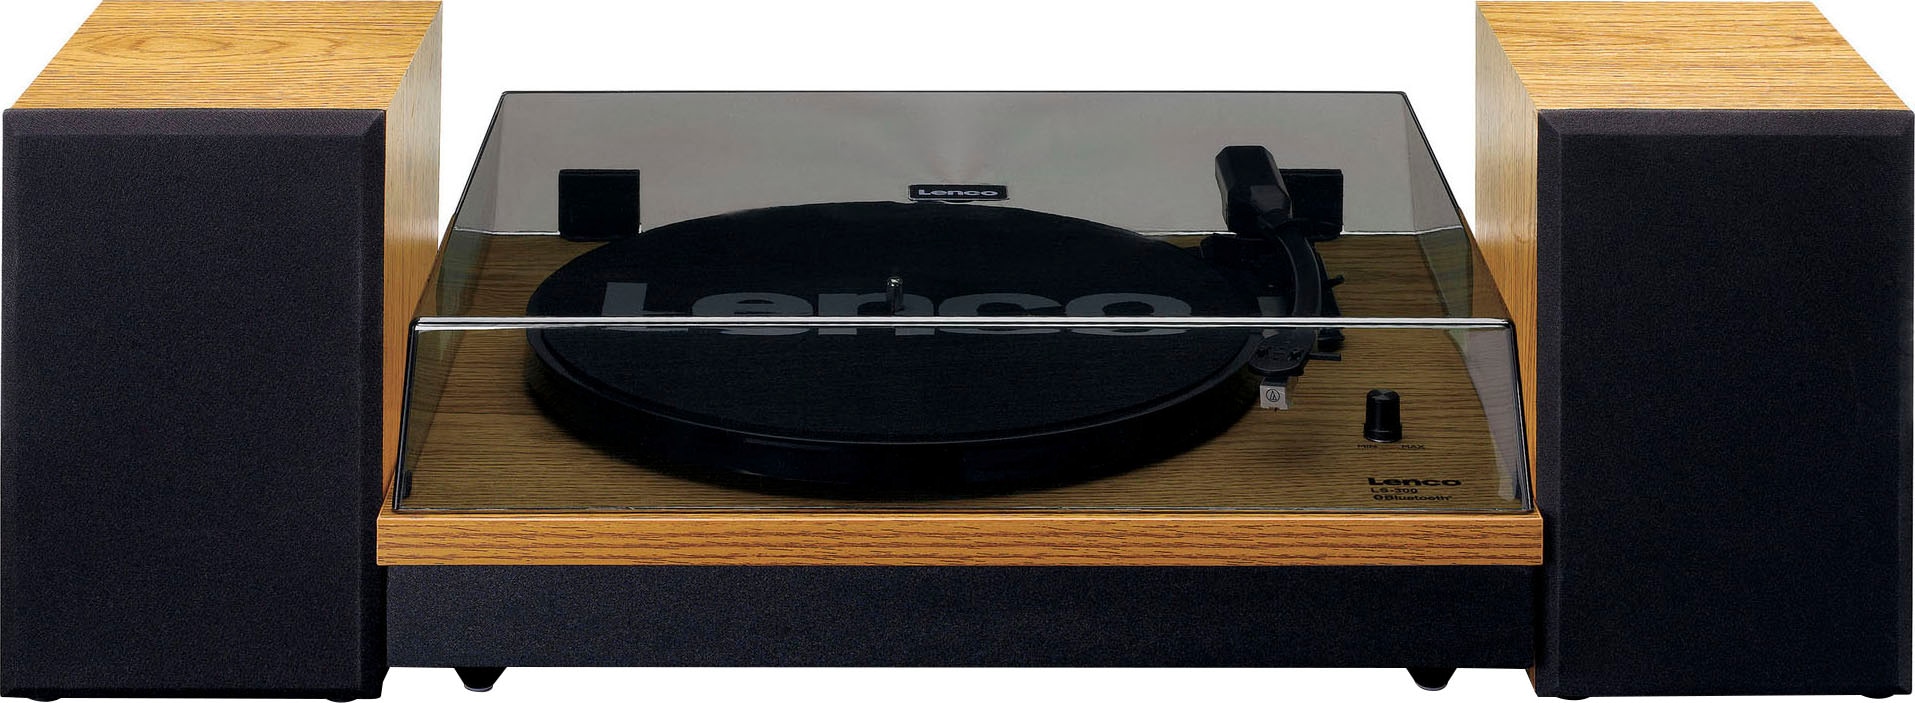 Lenco Plattenspieler »LS-300WD Plattenspieler ext. mit Lautsprechern« kaufen online